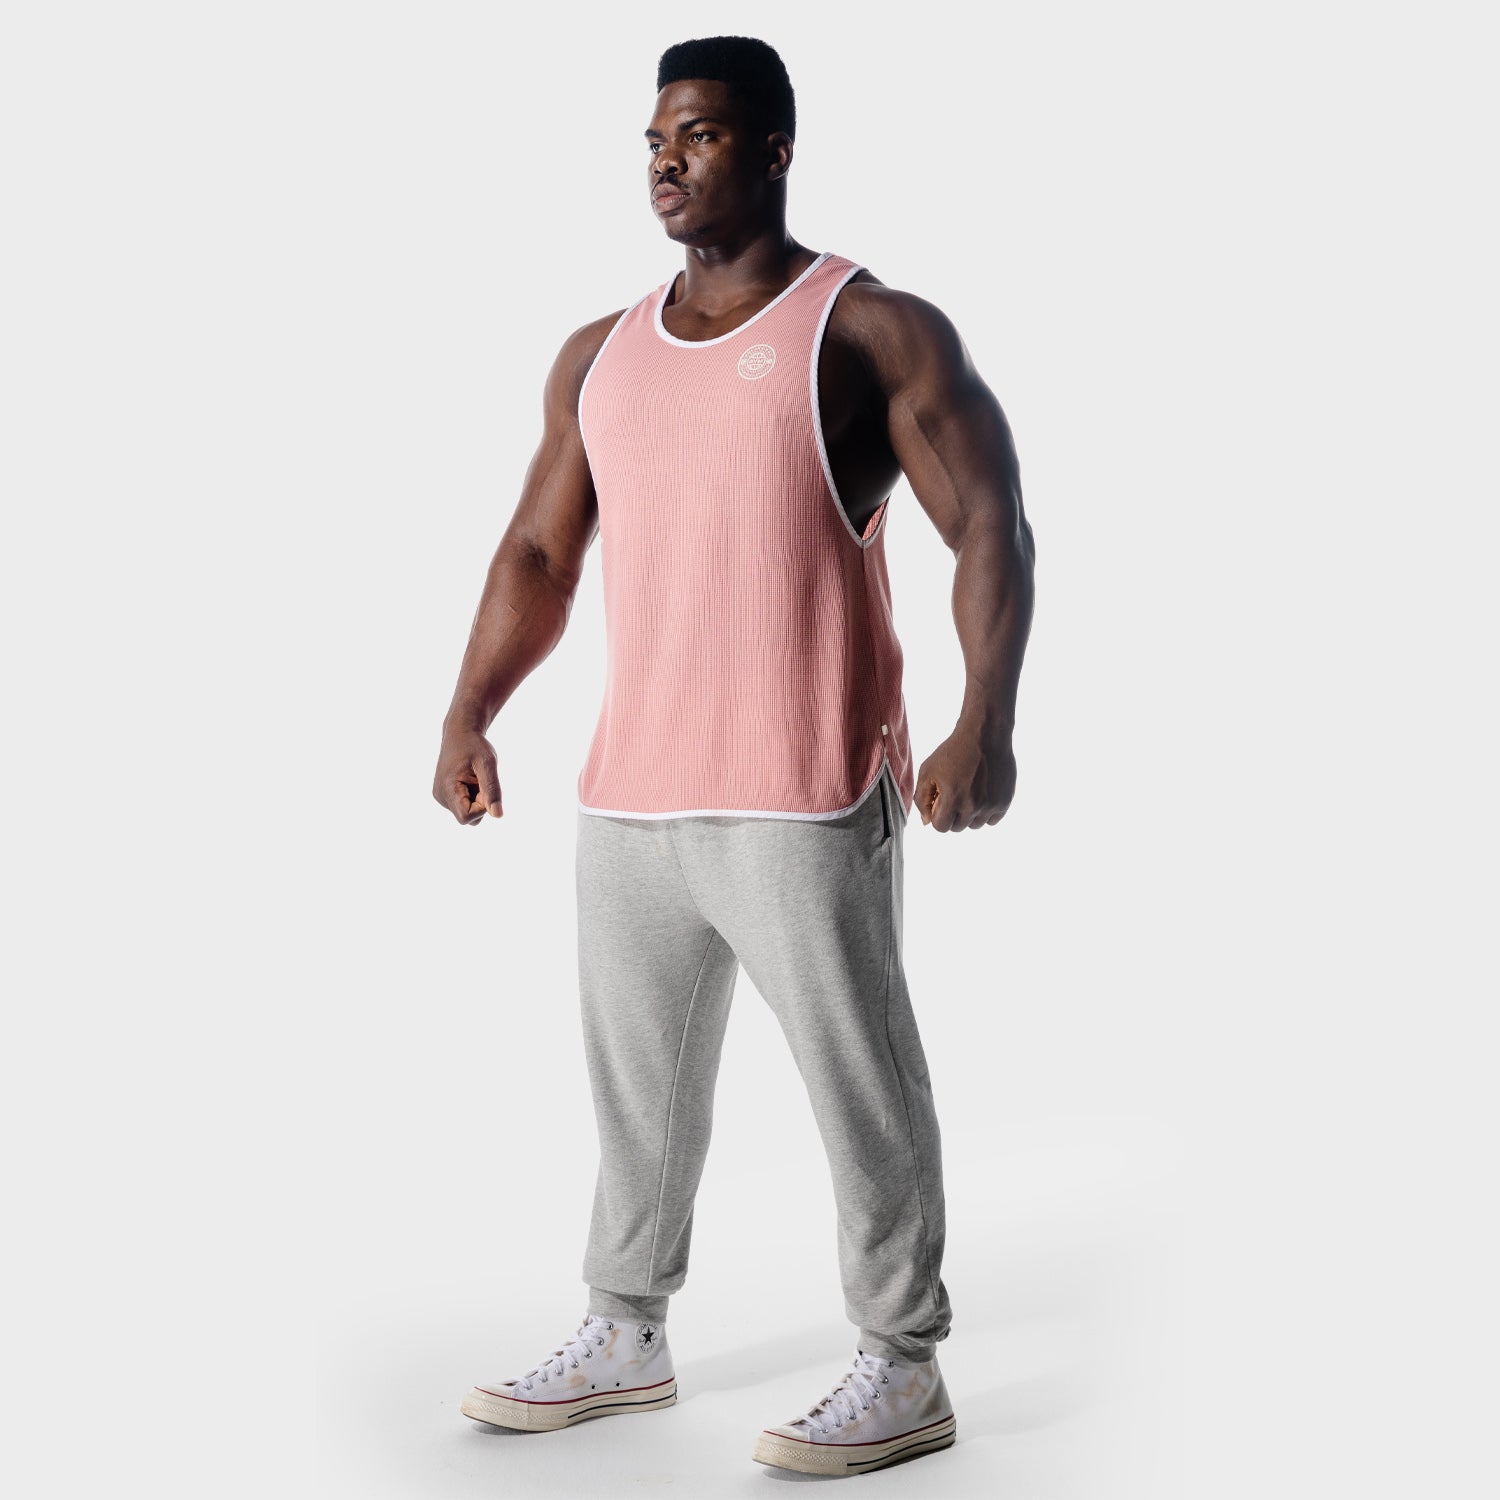 squatwolf-gym-wear-golden-era-waffle-tank-pink-workout-tank-tops-for-men